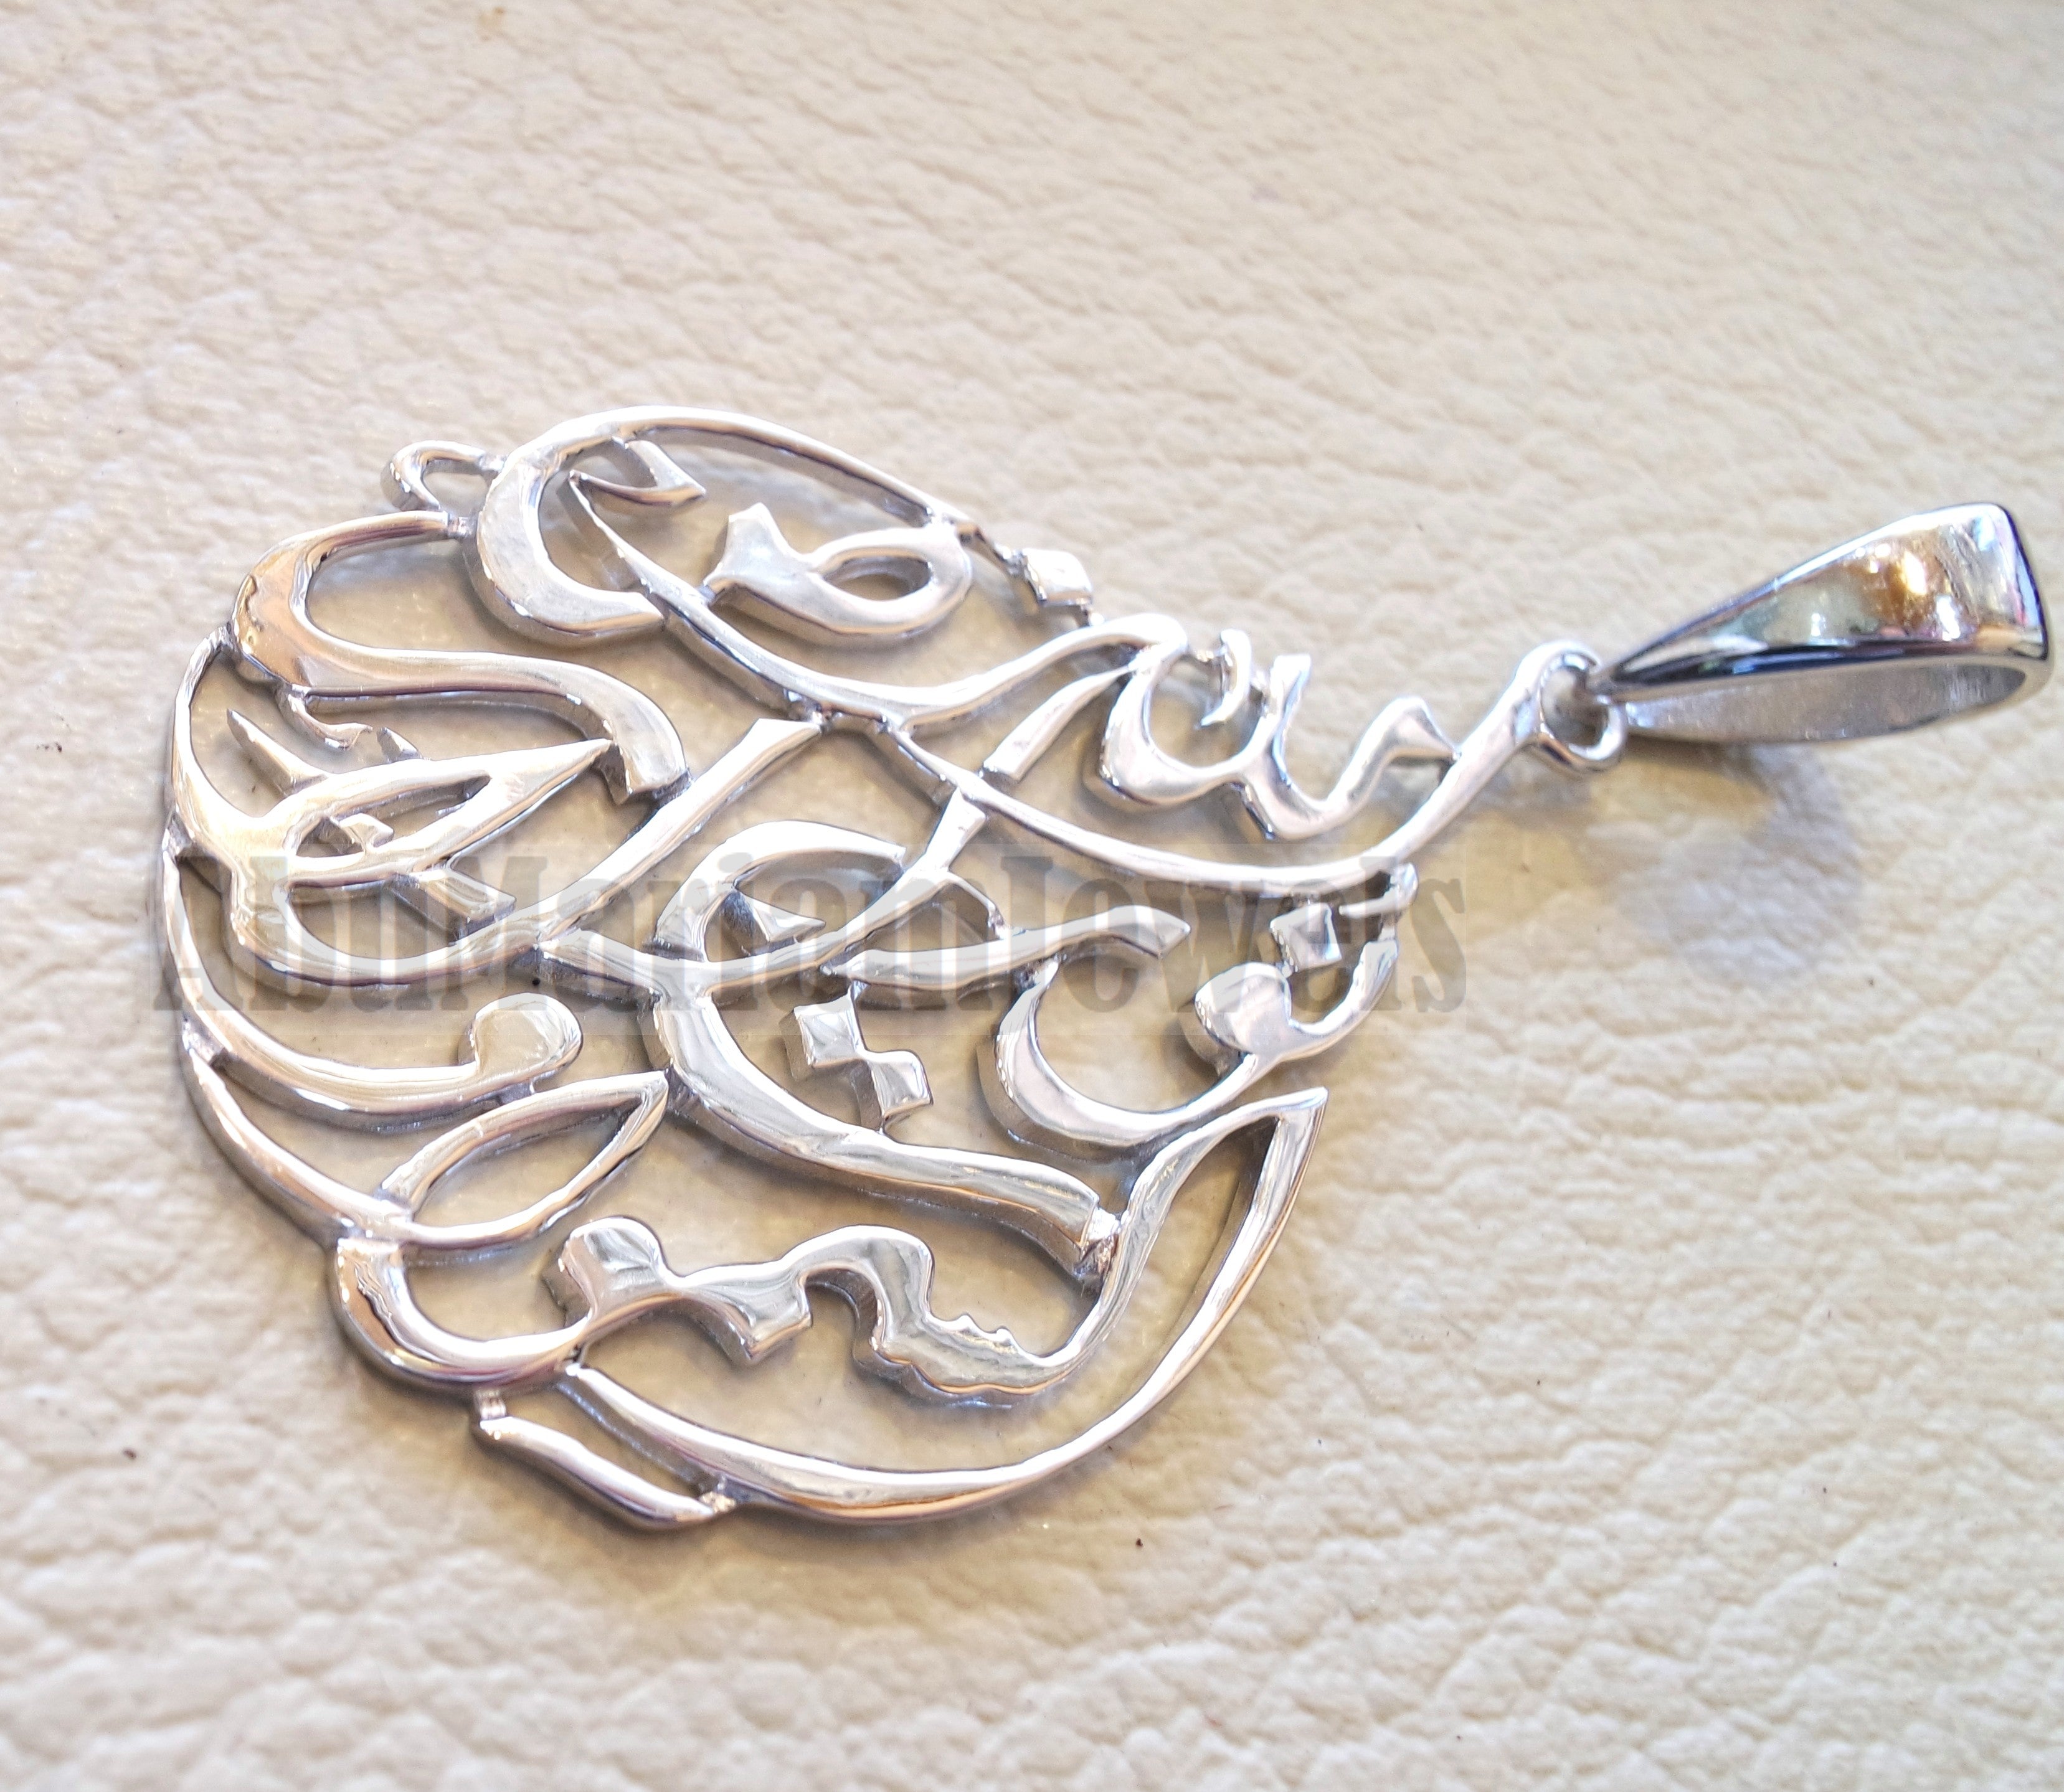 Allah noor Alsamawat quraan verses handmade calligraphy sterling silver 925 pear pendant islamic arabic اسلام الله